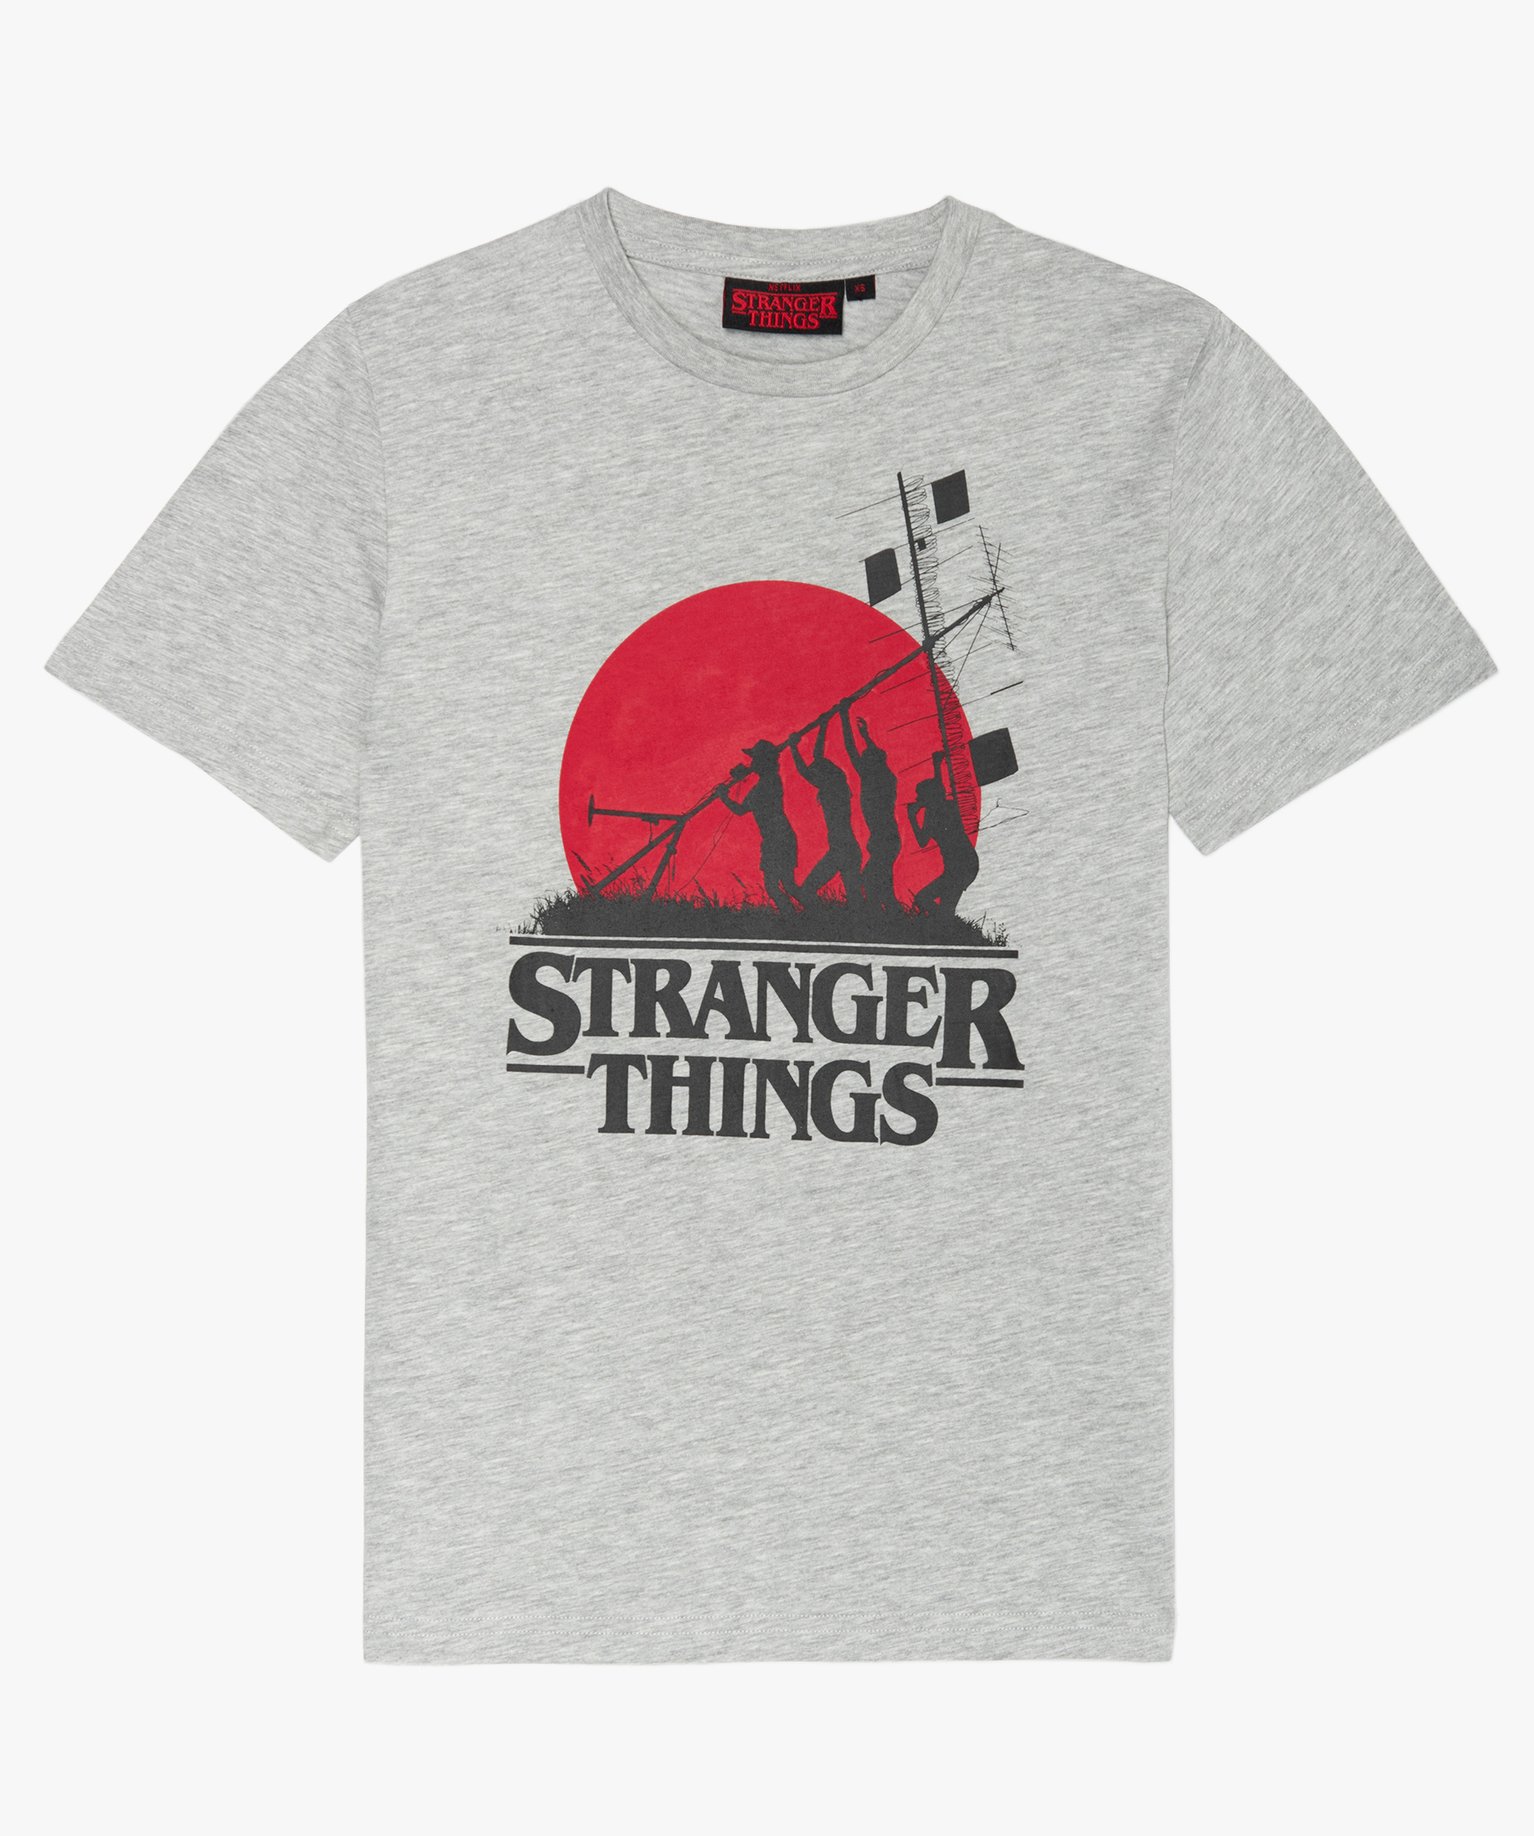 Tee-shirt garçon avec motif XXL- Stranger Things - XXS - gris - STRANGER THINGS